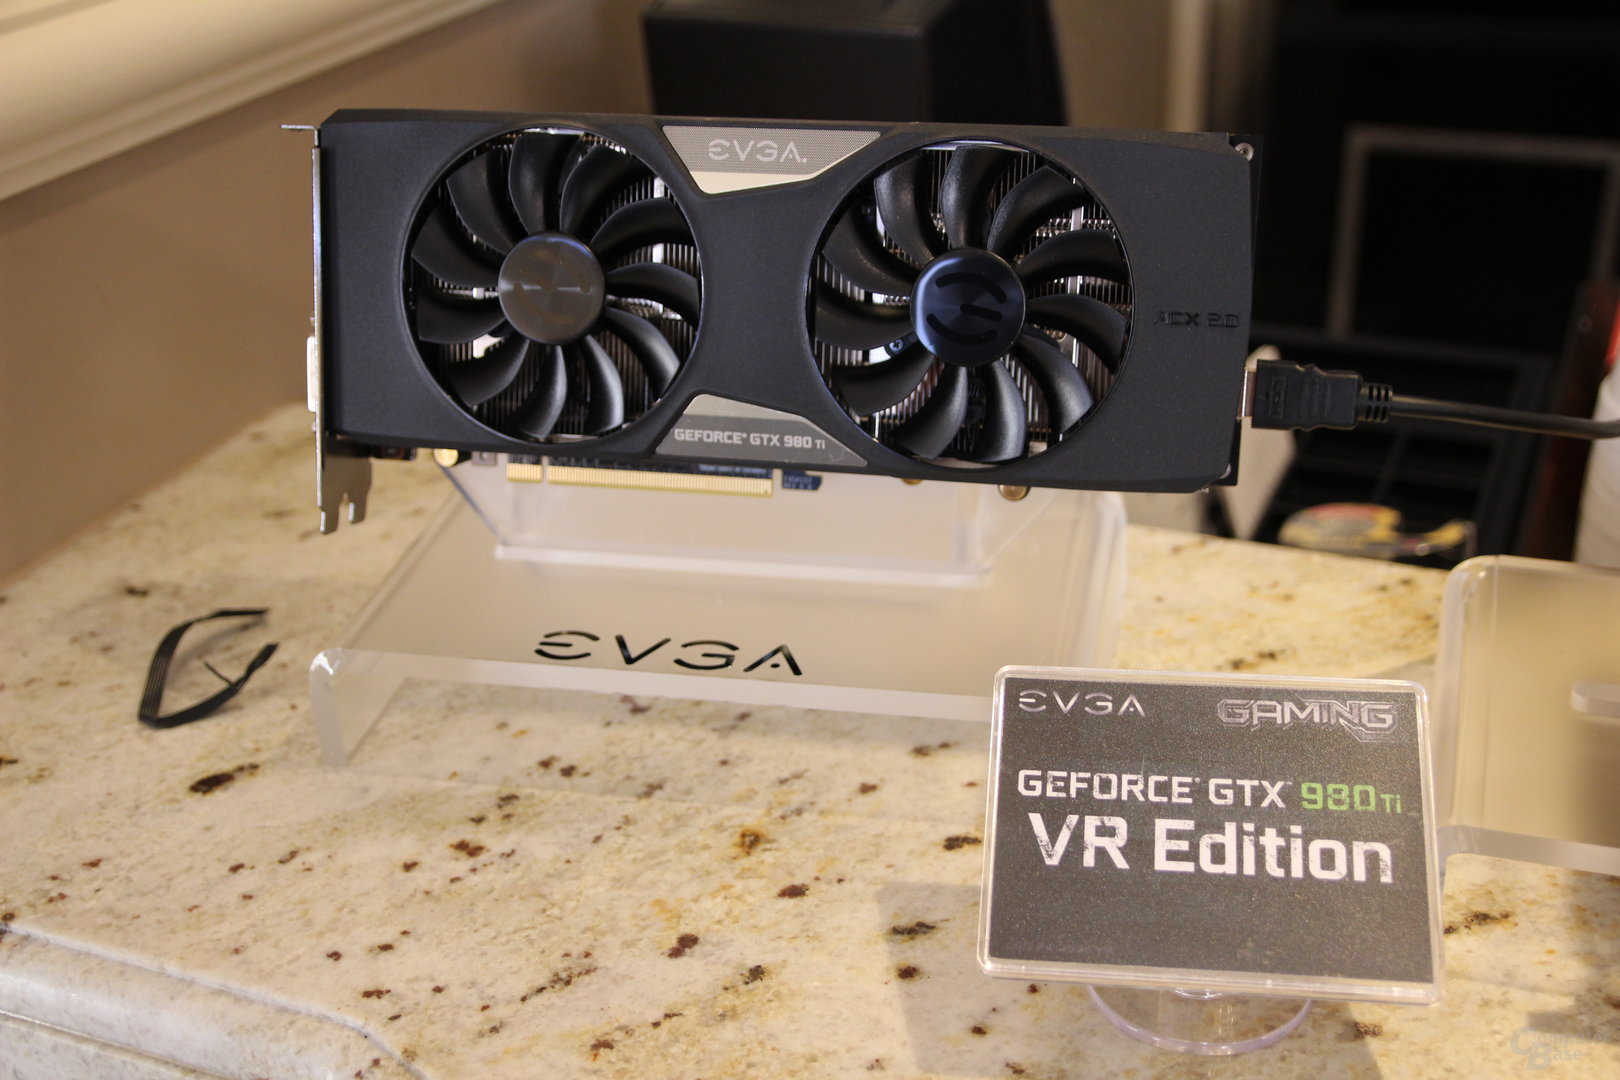 EVGA GeForce GTX 980 Ti VR